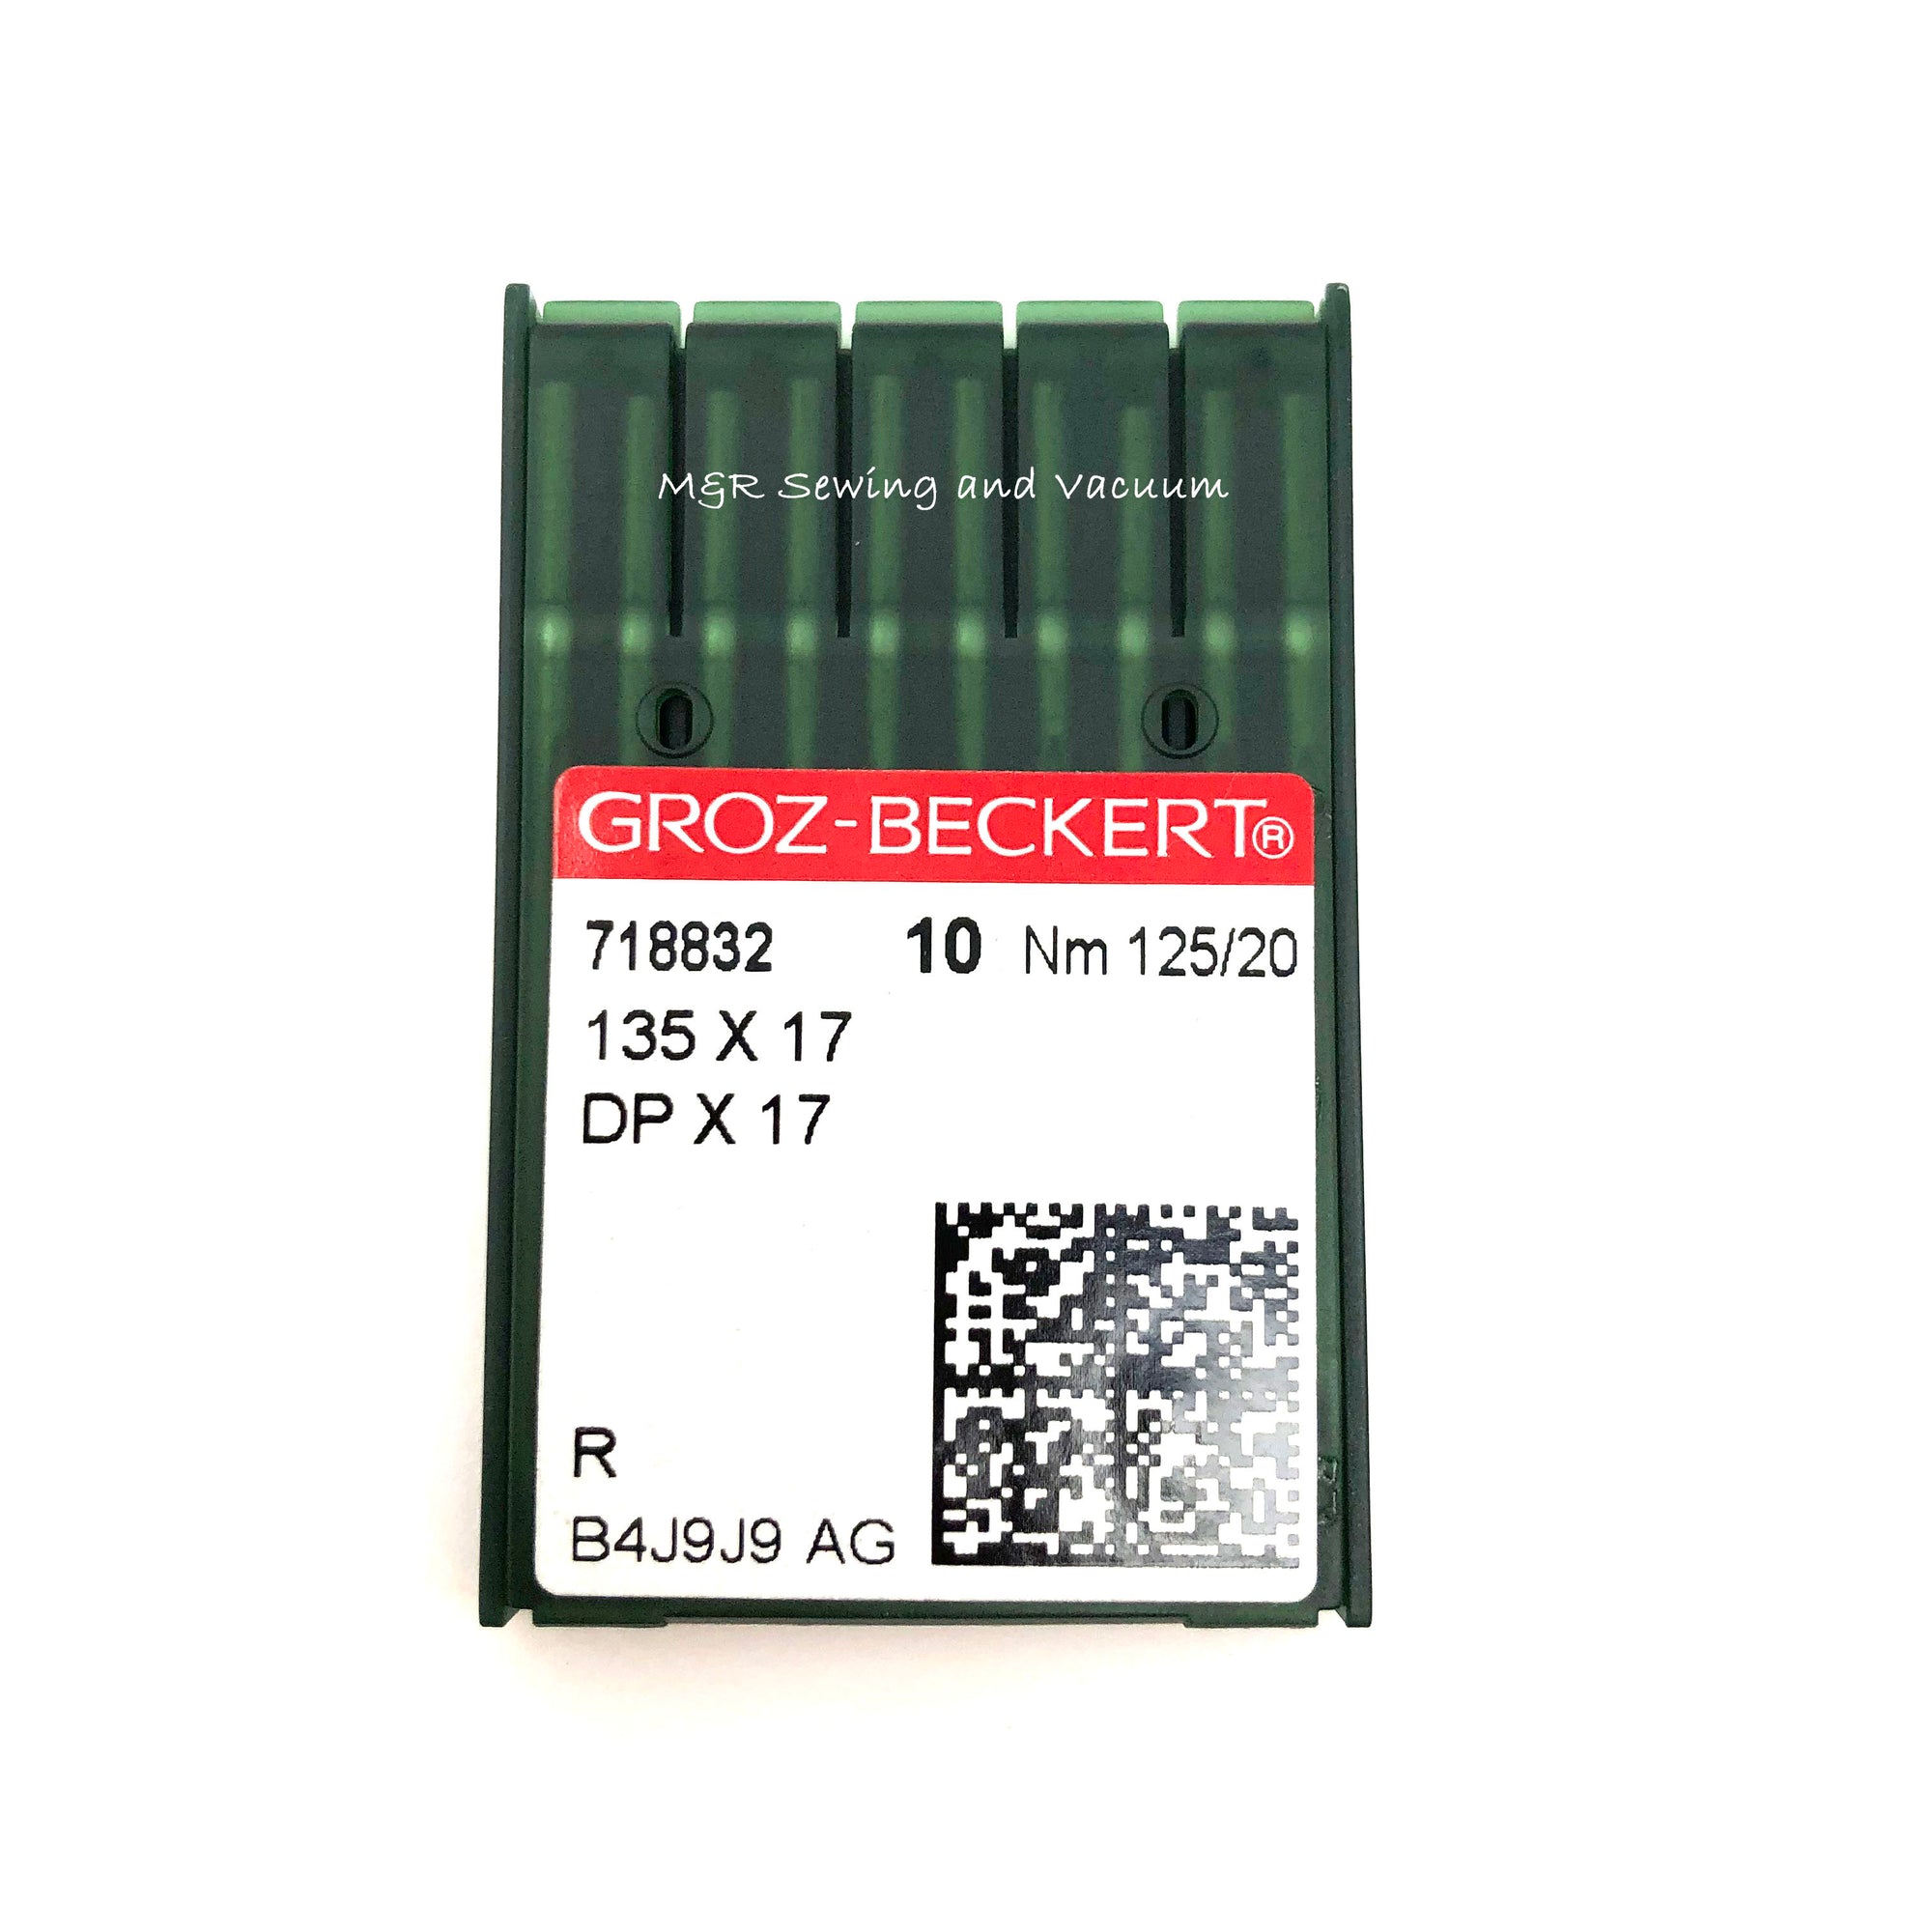 Groz-Beckert 135x17 Industrial Needles - 125/20